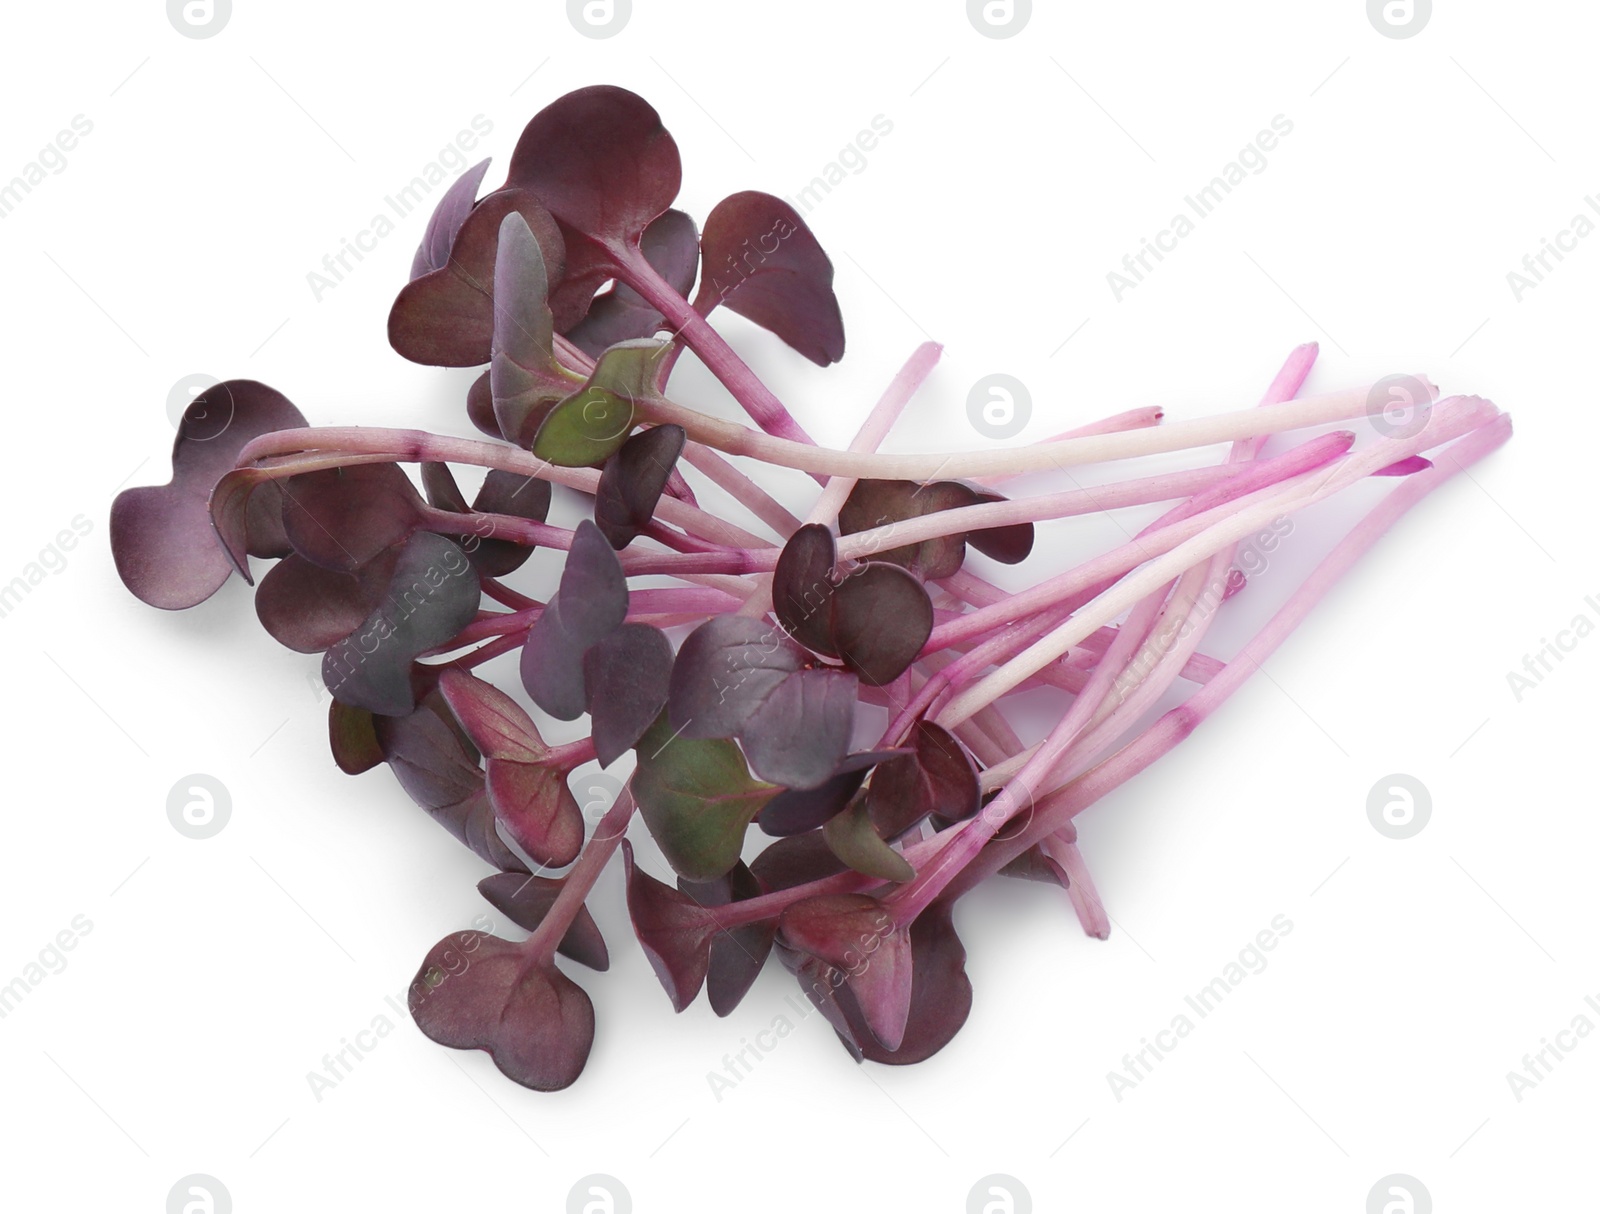 Photo of Fresh organic radish microgreens on white background, top view